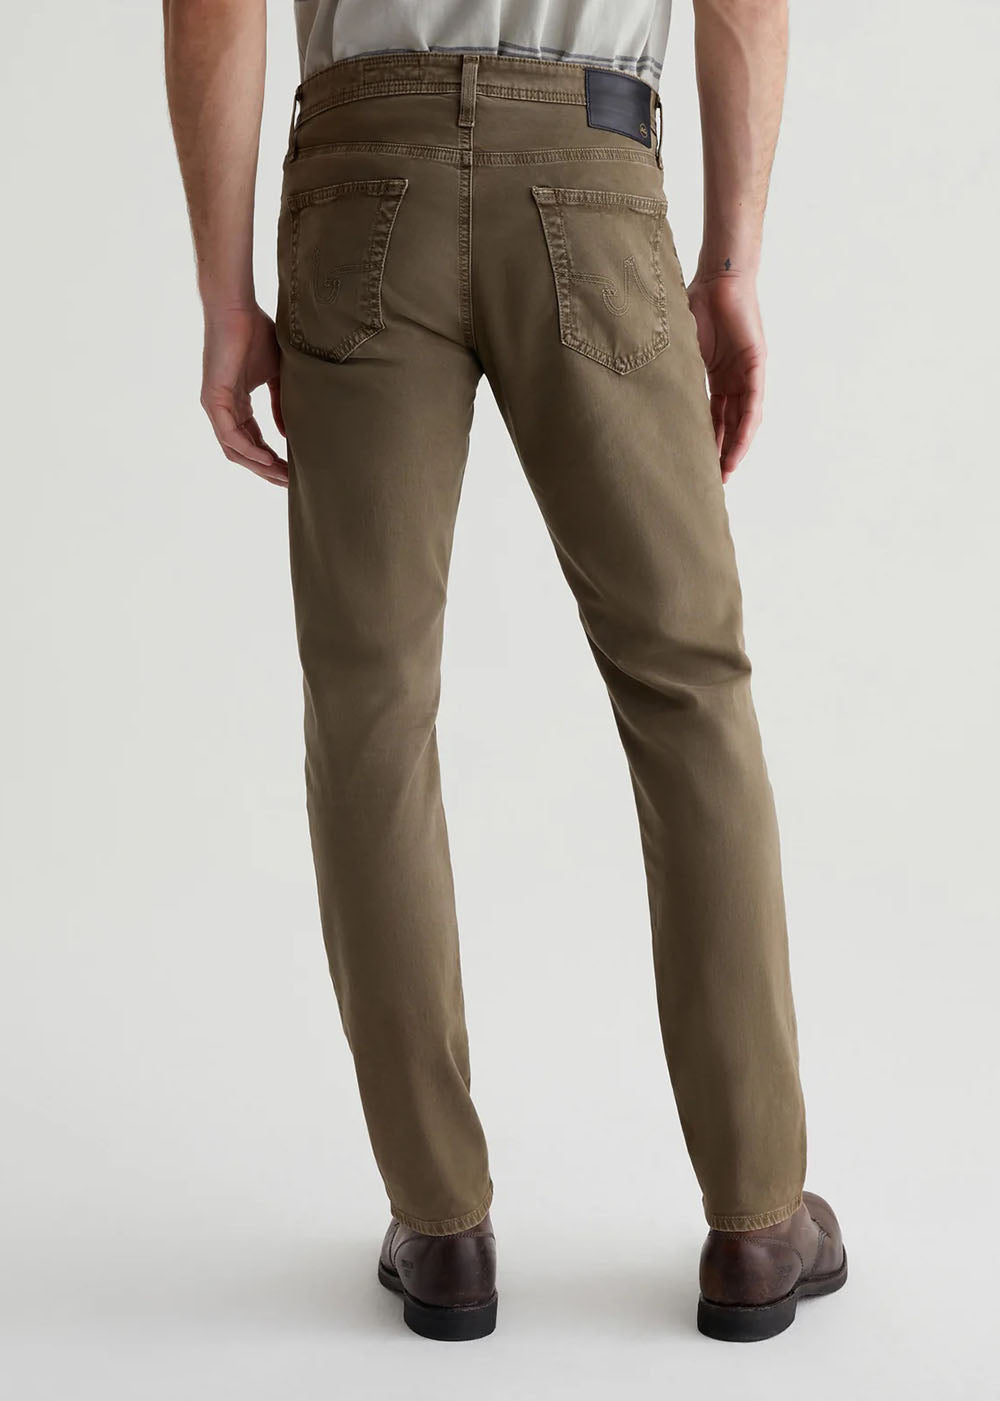 Tellis Modern Slim Pant - Sulfur Cedarwood - AG Jeans Canada - Danali - 1783SUDSLCEDR